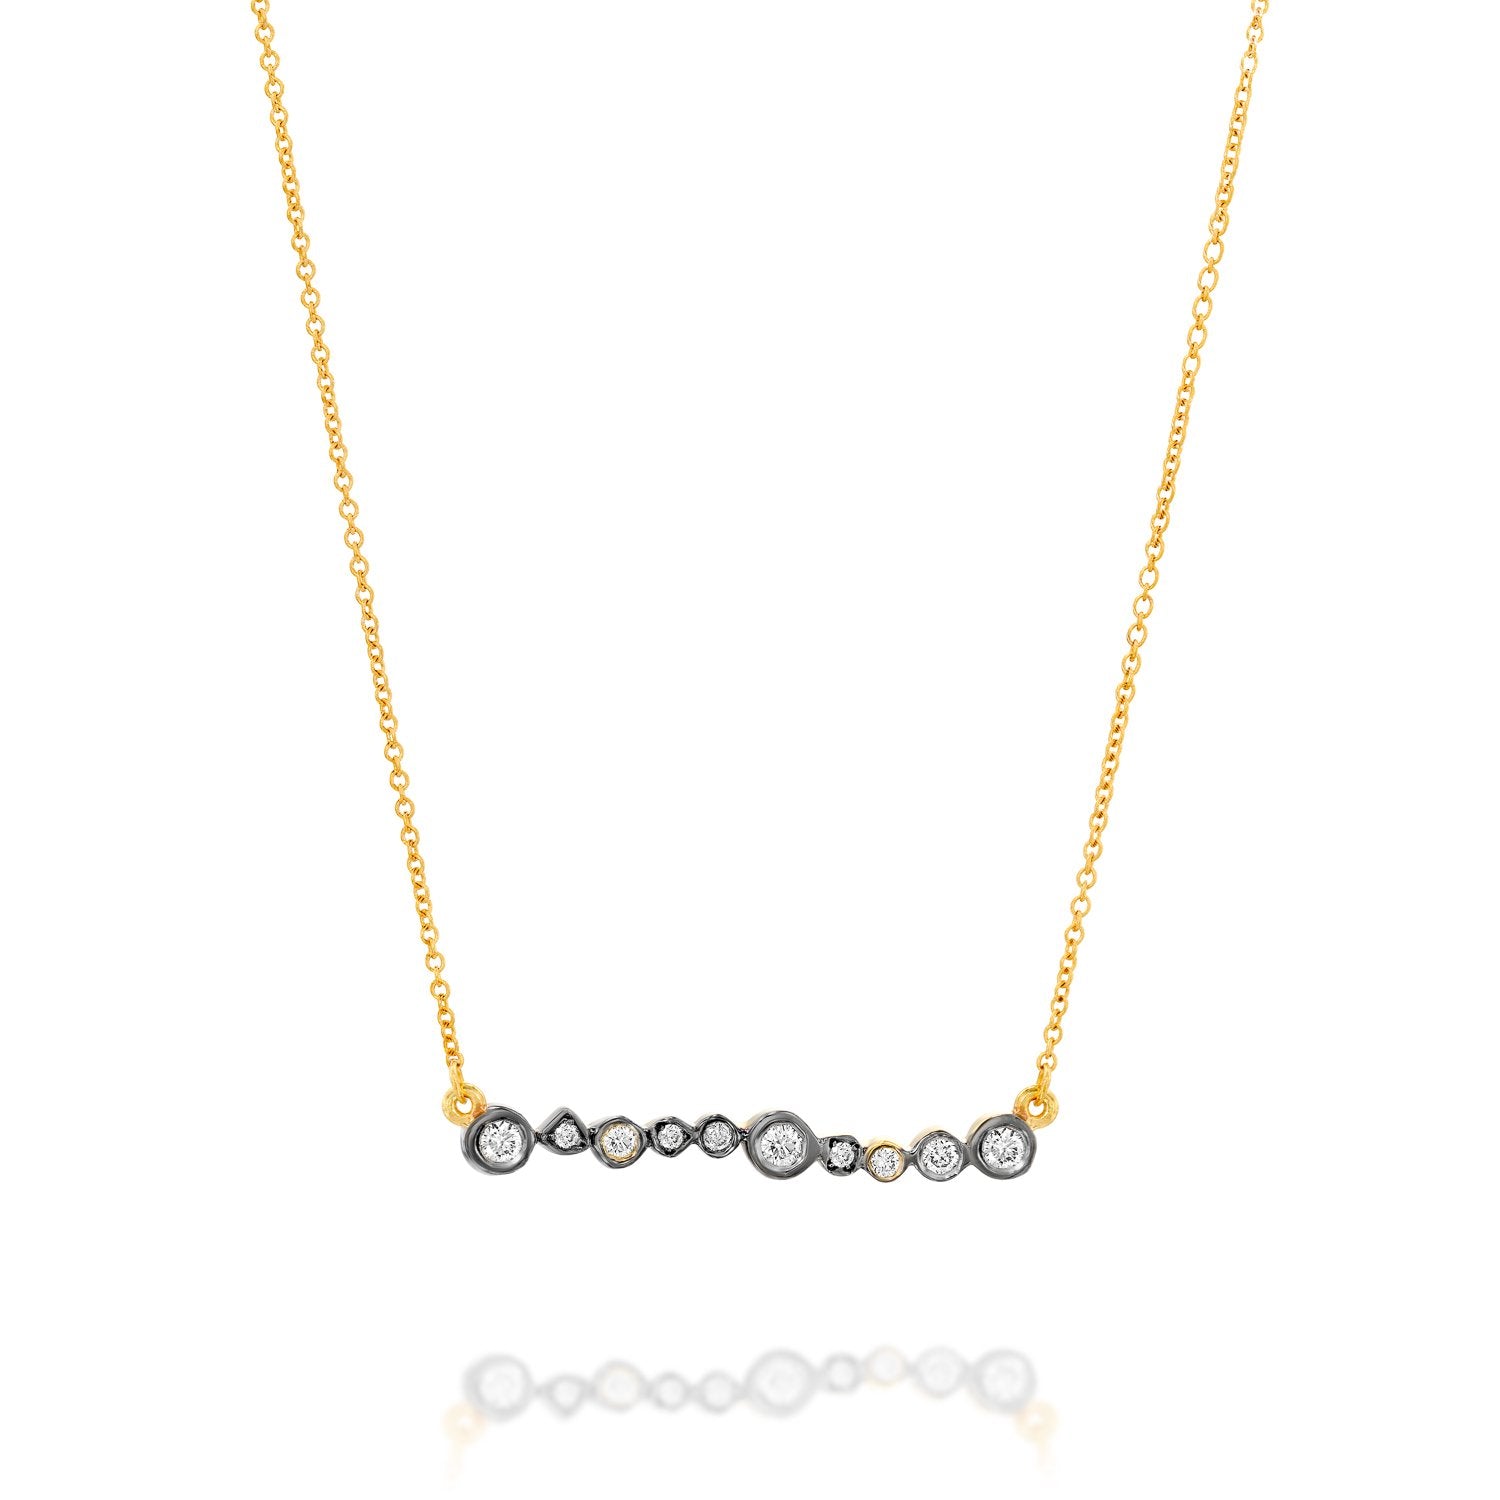 6603 - 14kt yellow gold diamond bar necklace with black rhodium